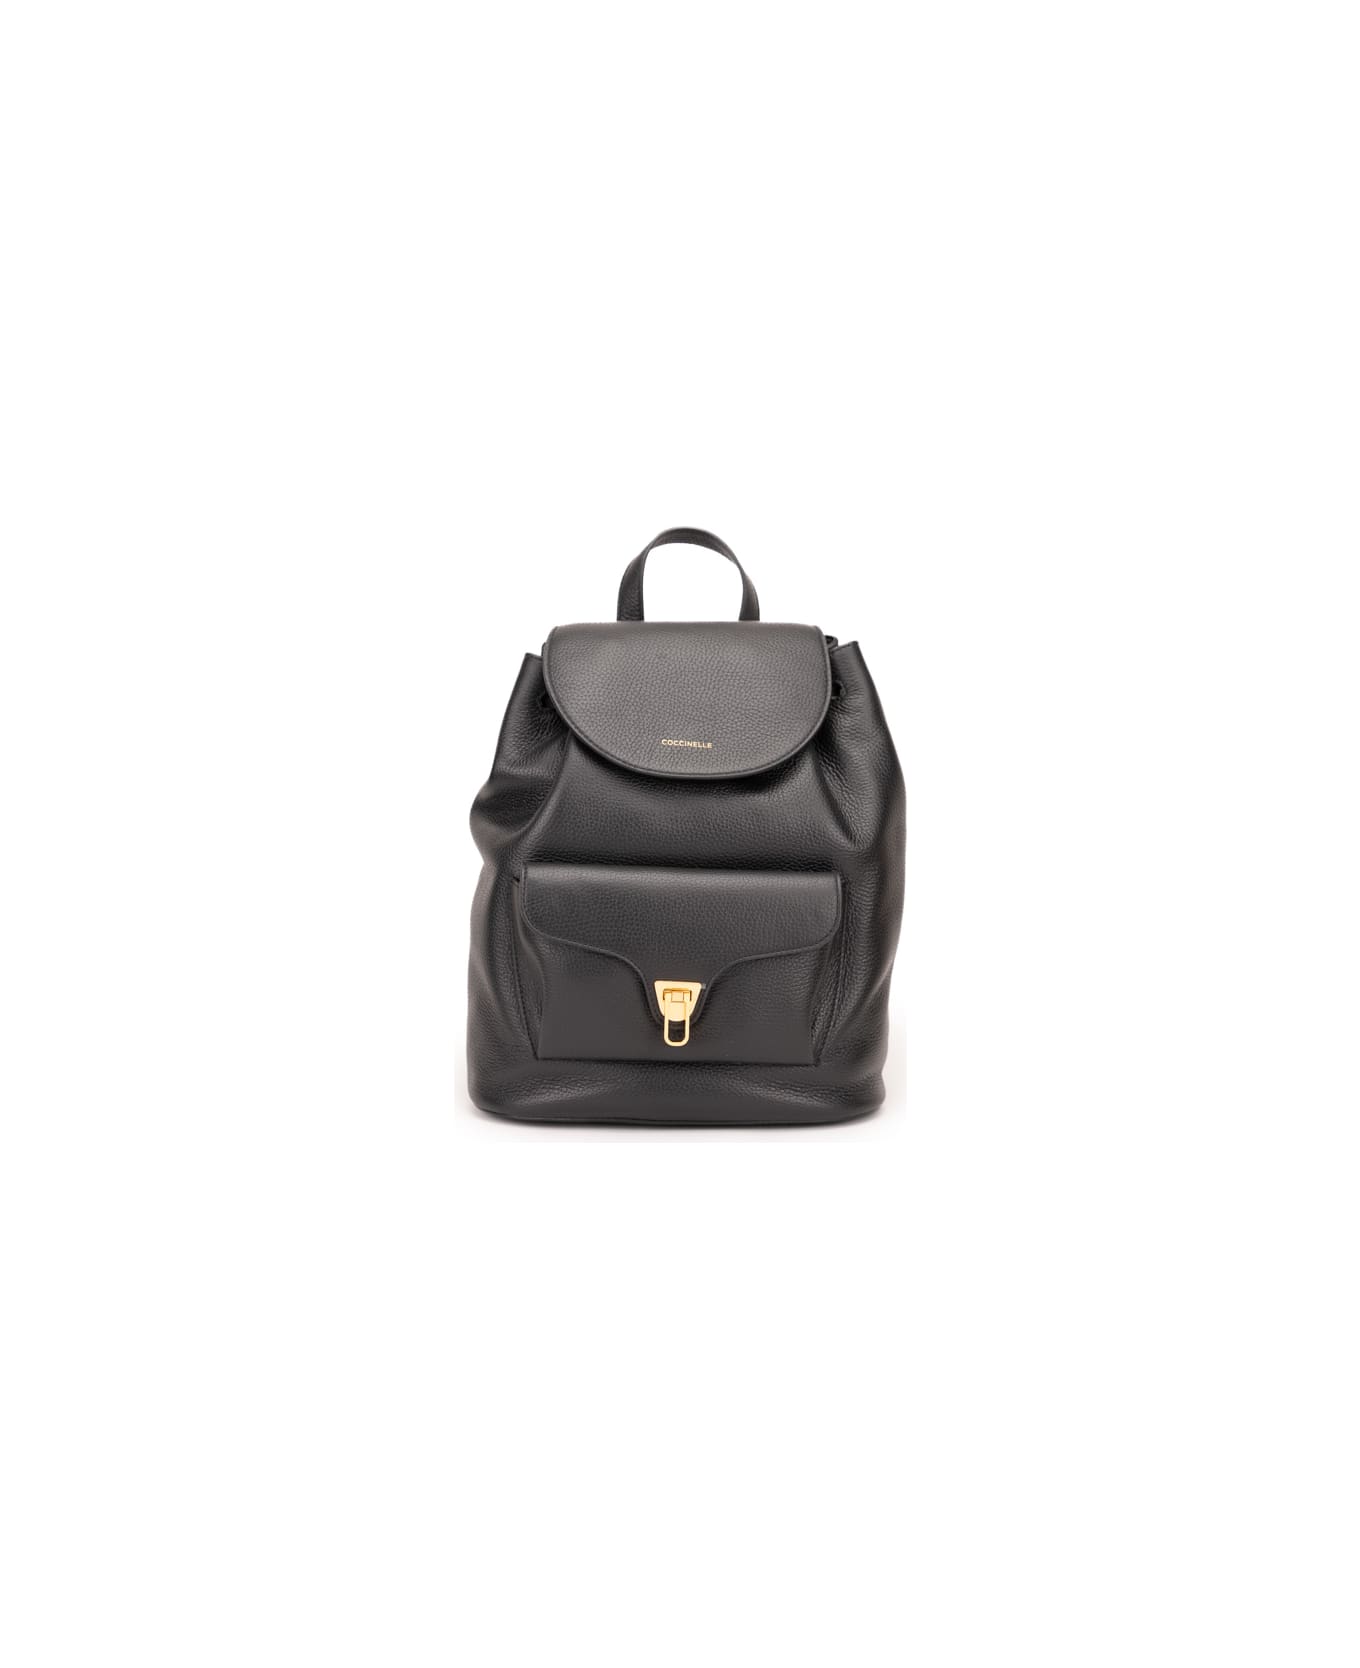 Coccinelle Hammered Leather Backpack - Noir バックパック